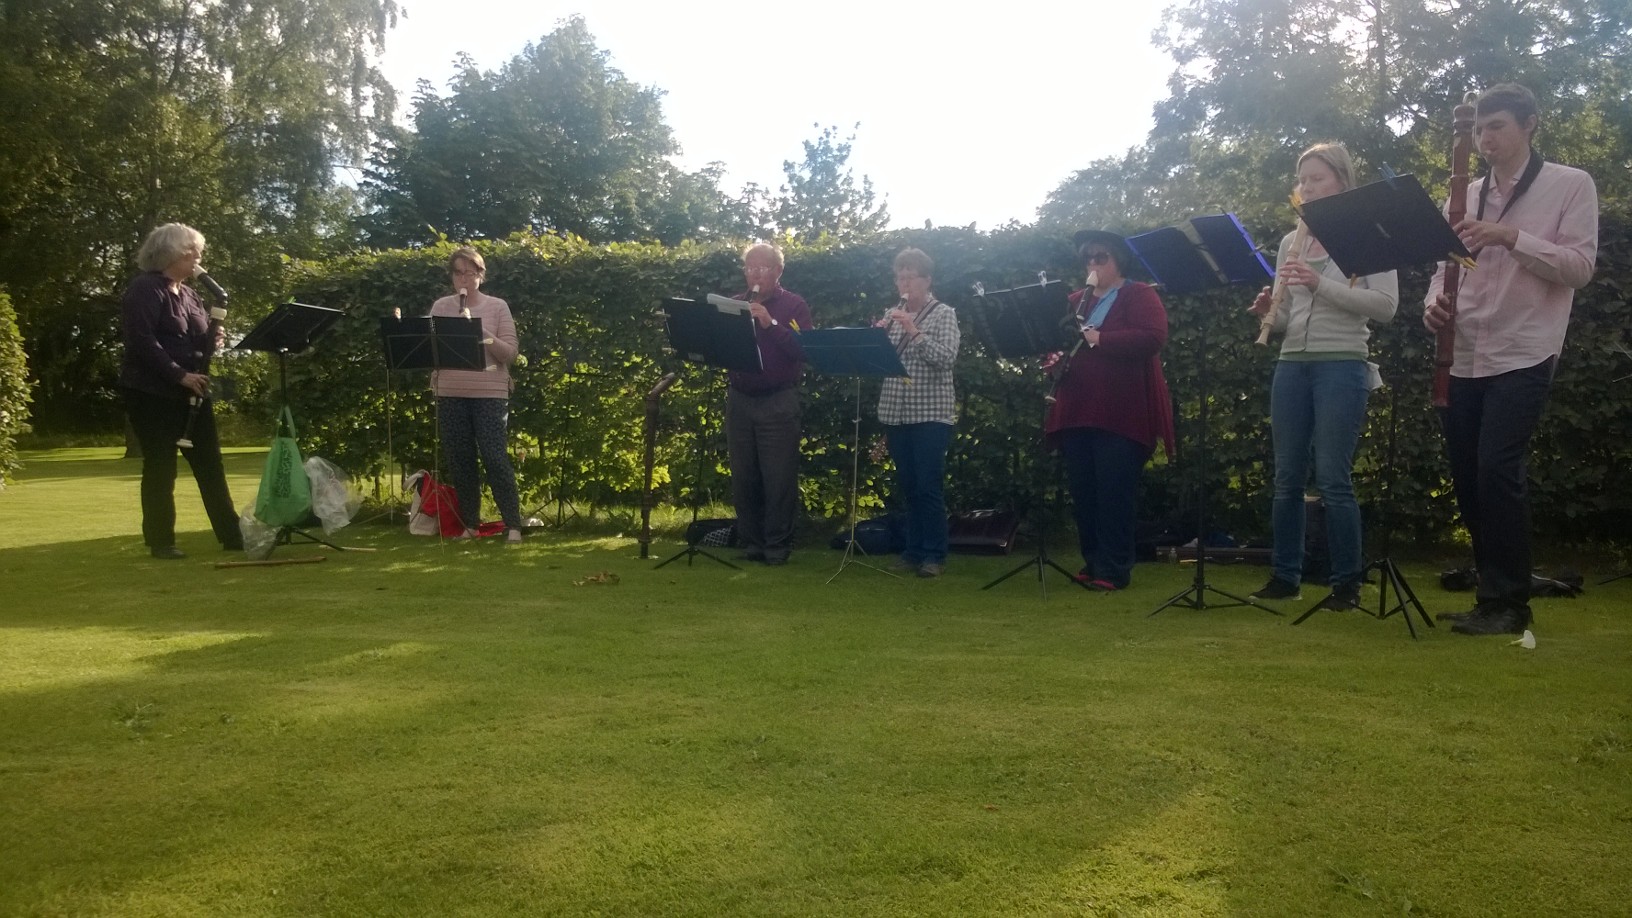 Elizabethan Music ensemble supporting the Handlebards performance at Felton Park.